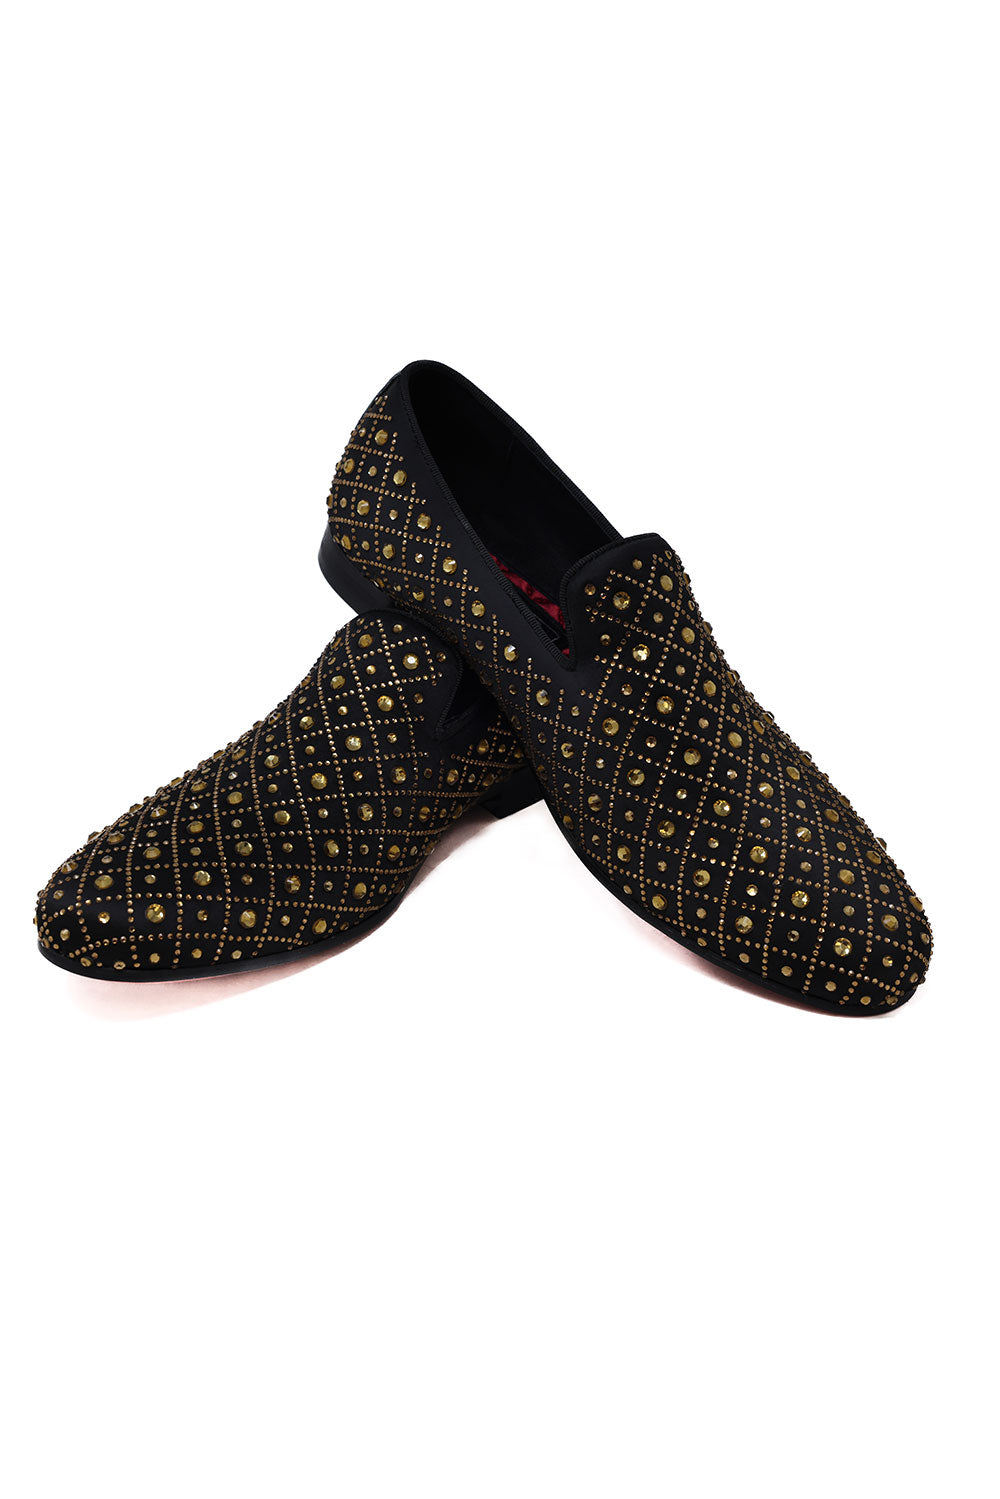 Barabas Men's Rhinestone Jewel Pattern Slip On Dress Shoes 2ESH11Black